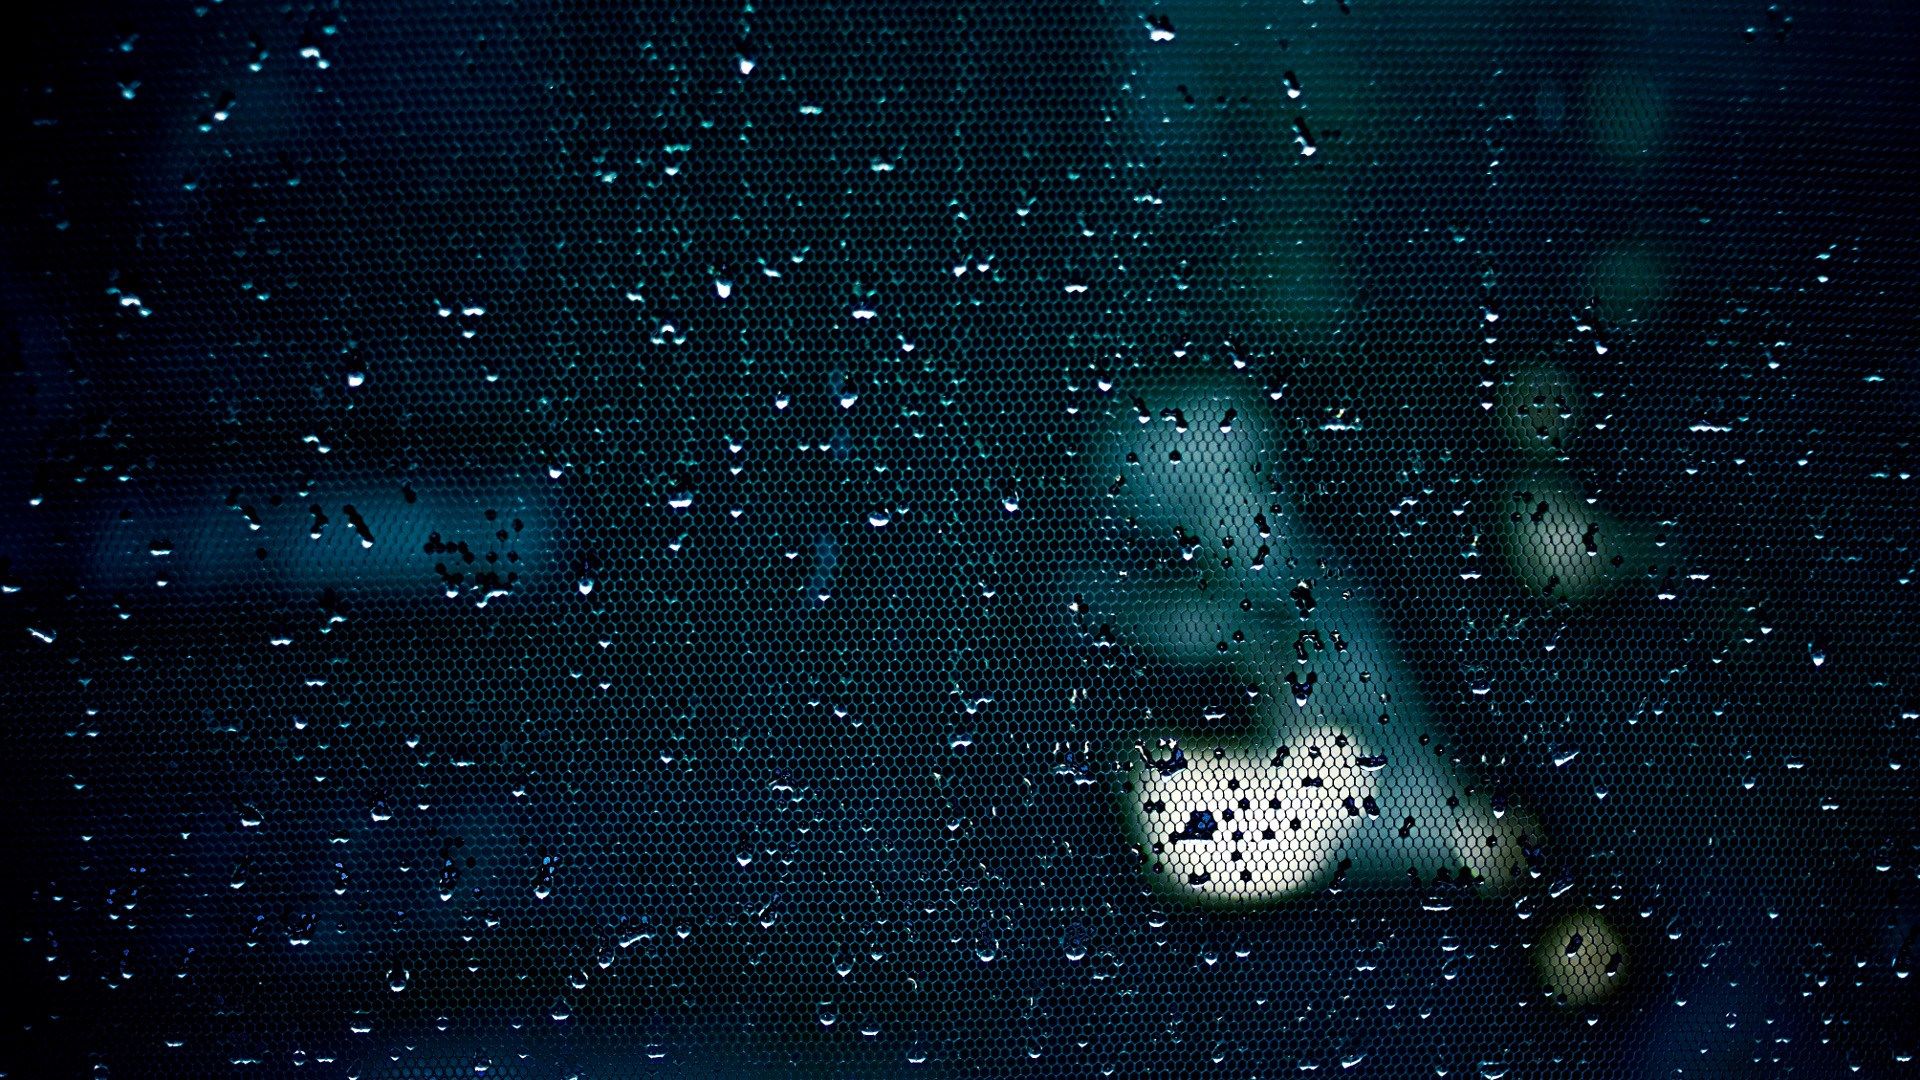 Screen Water Drops Wallpaper [1920x1080]